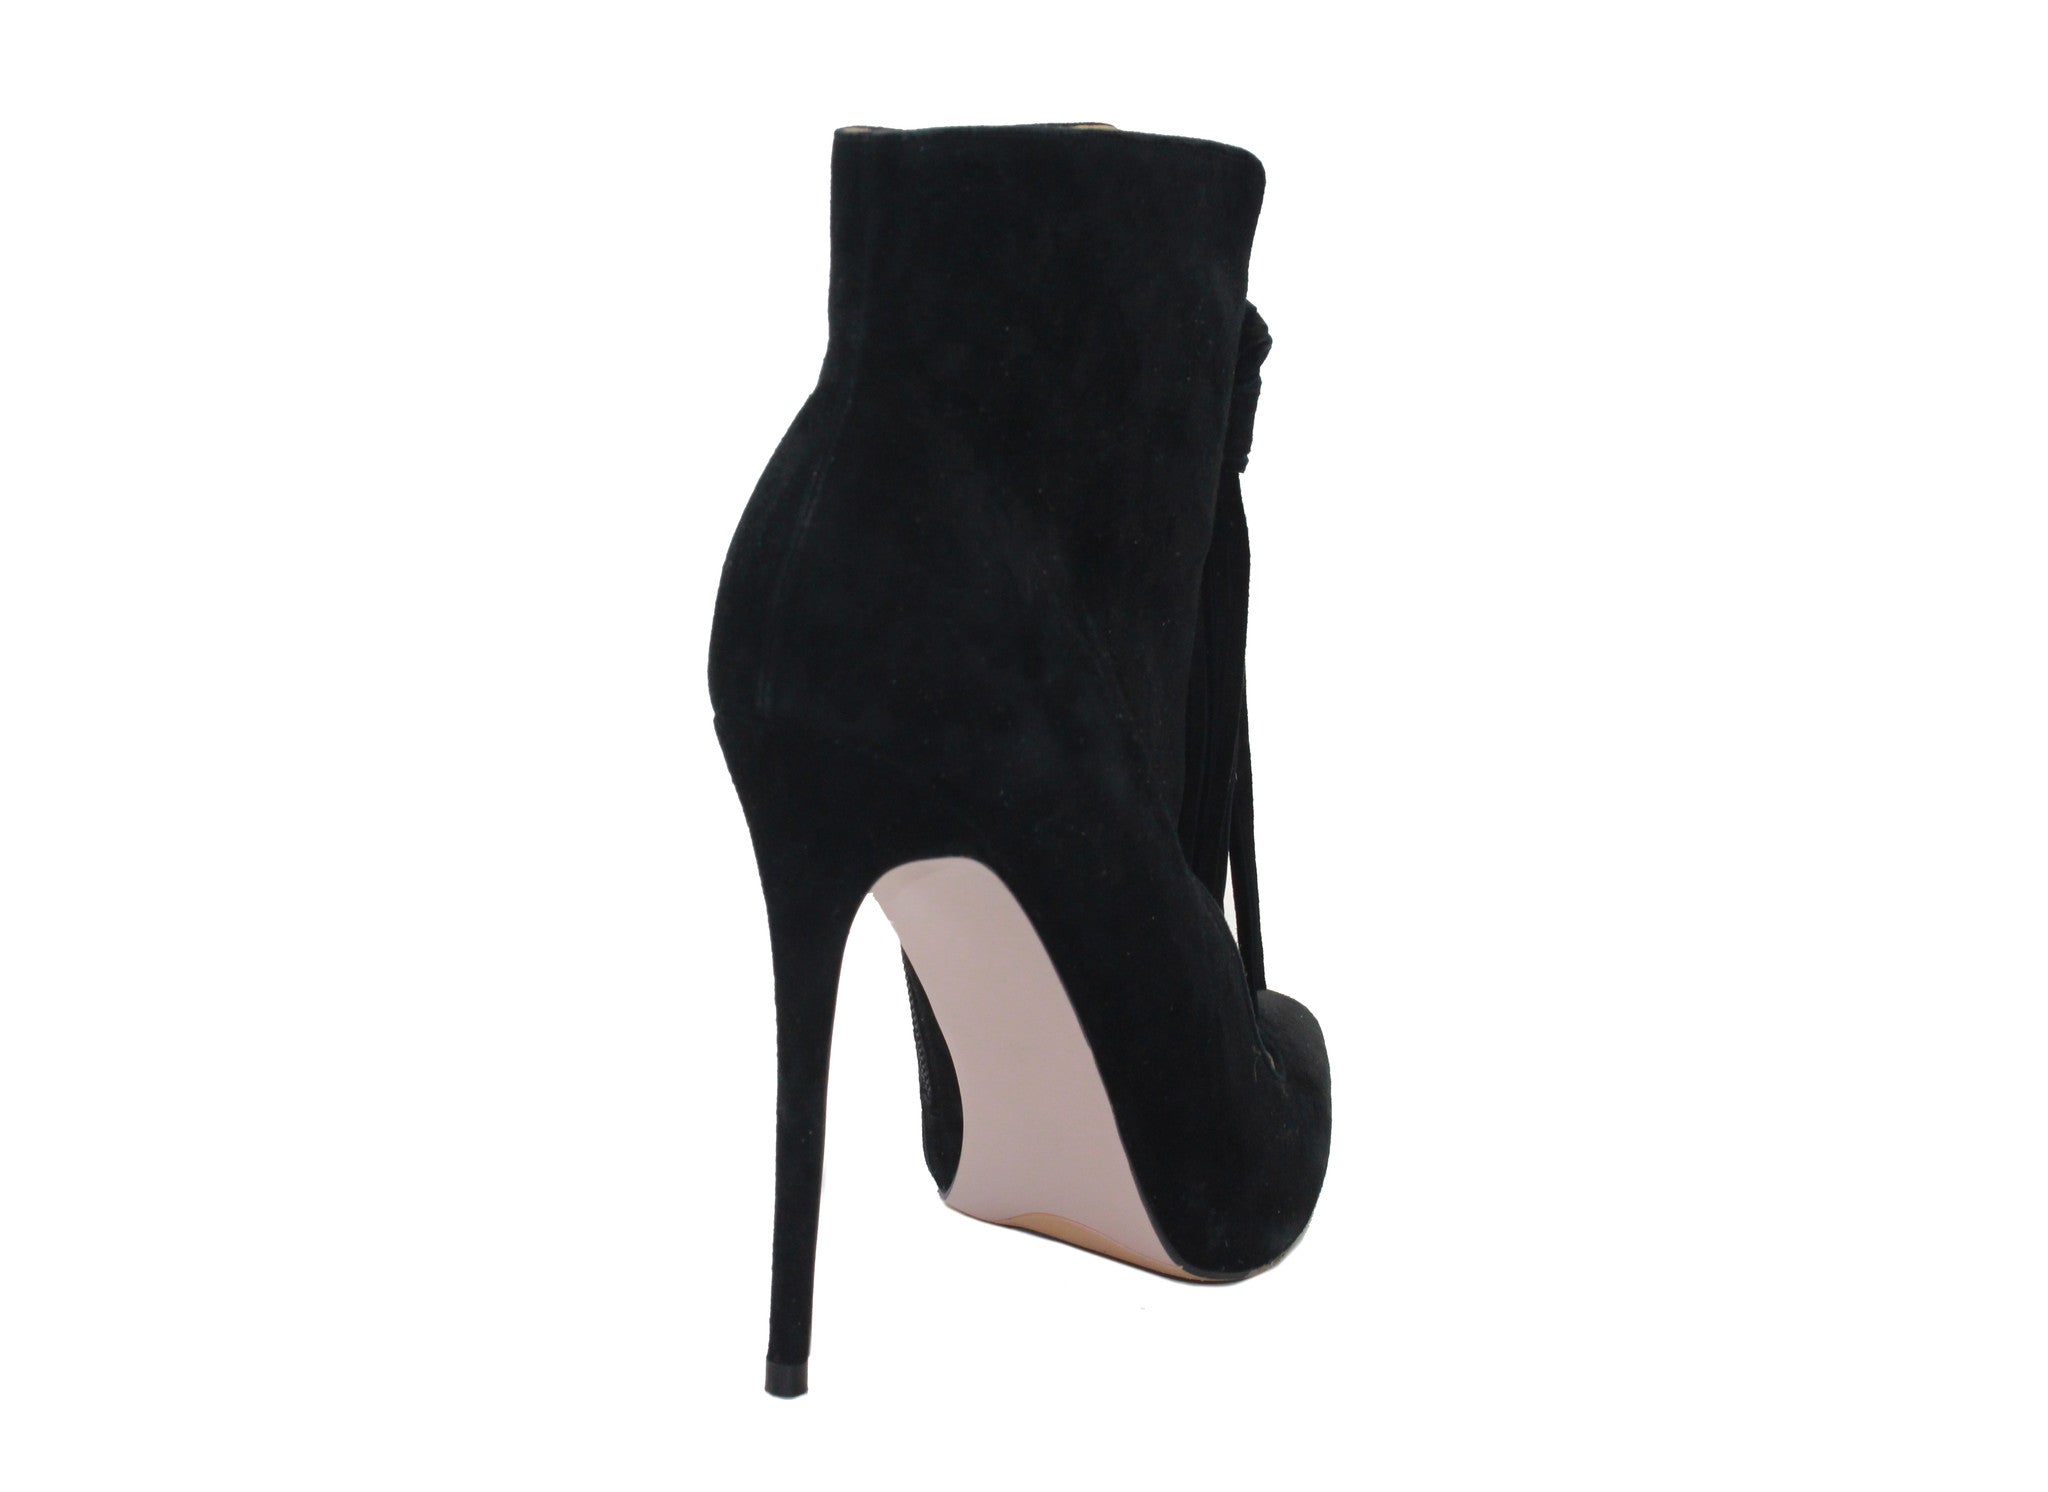 5 inch black heels